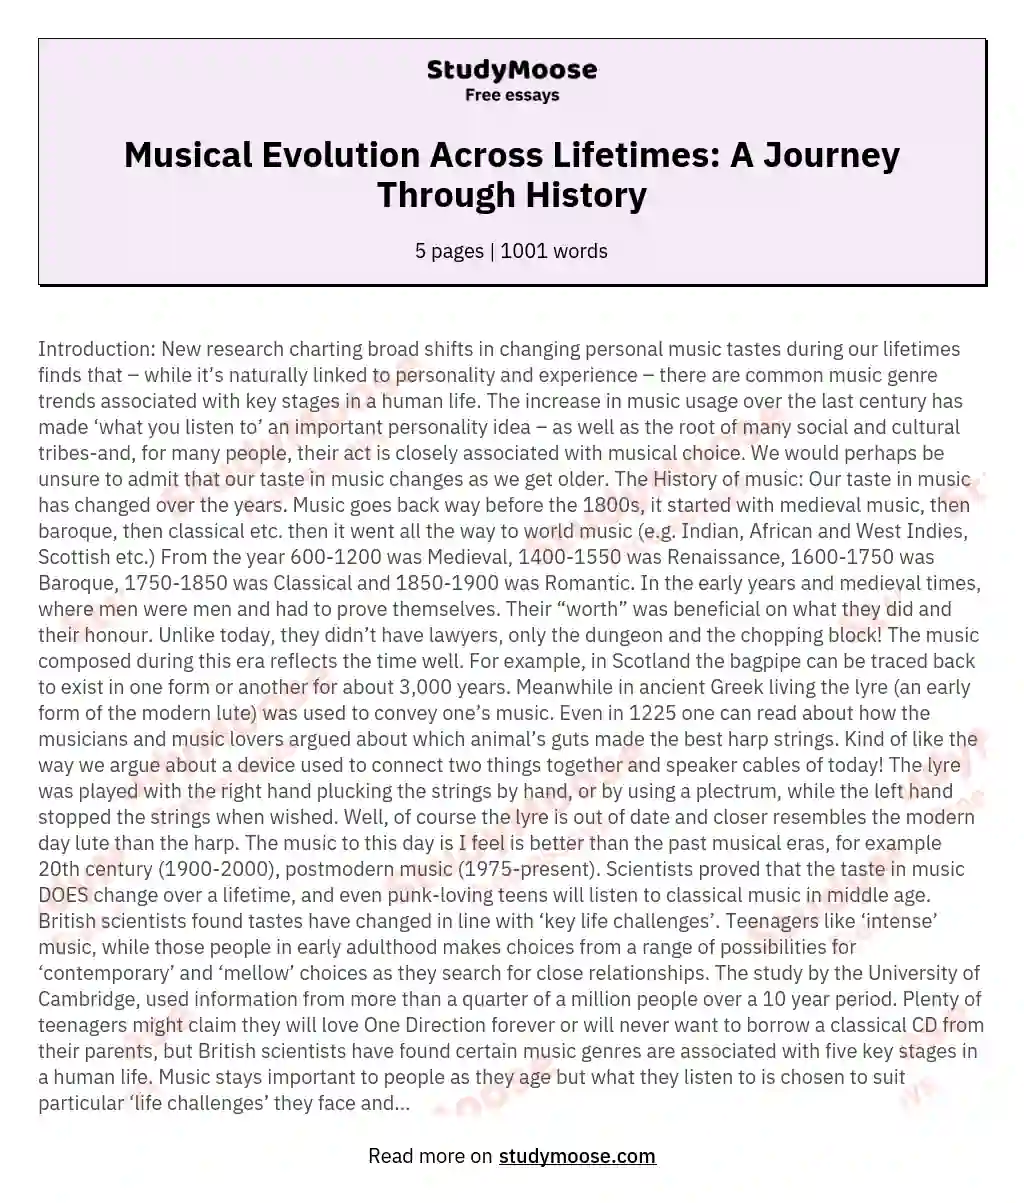 Musical Evolution Across Lifetimes: A Journey Through History essay